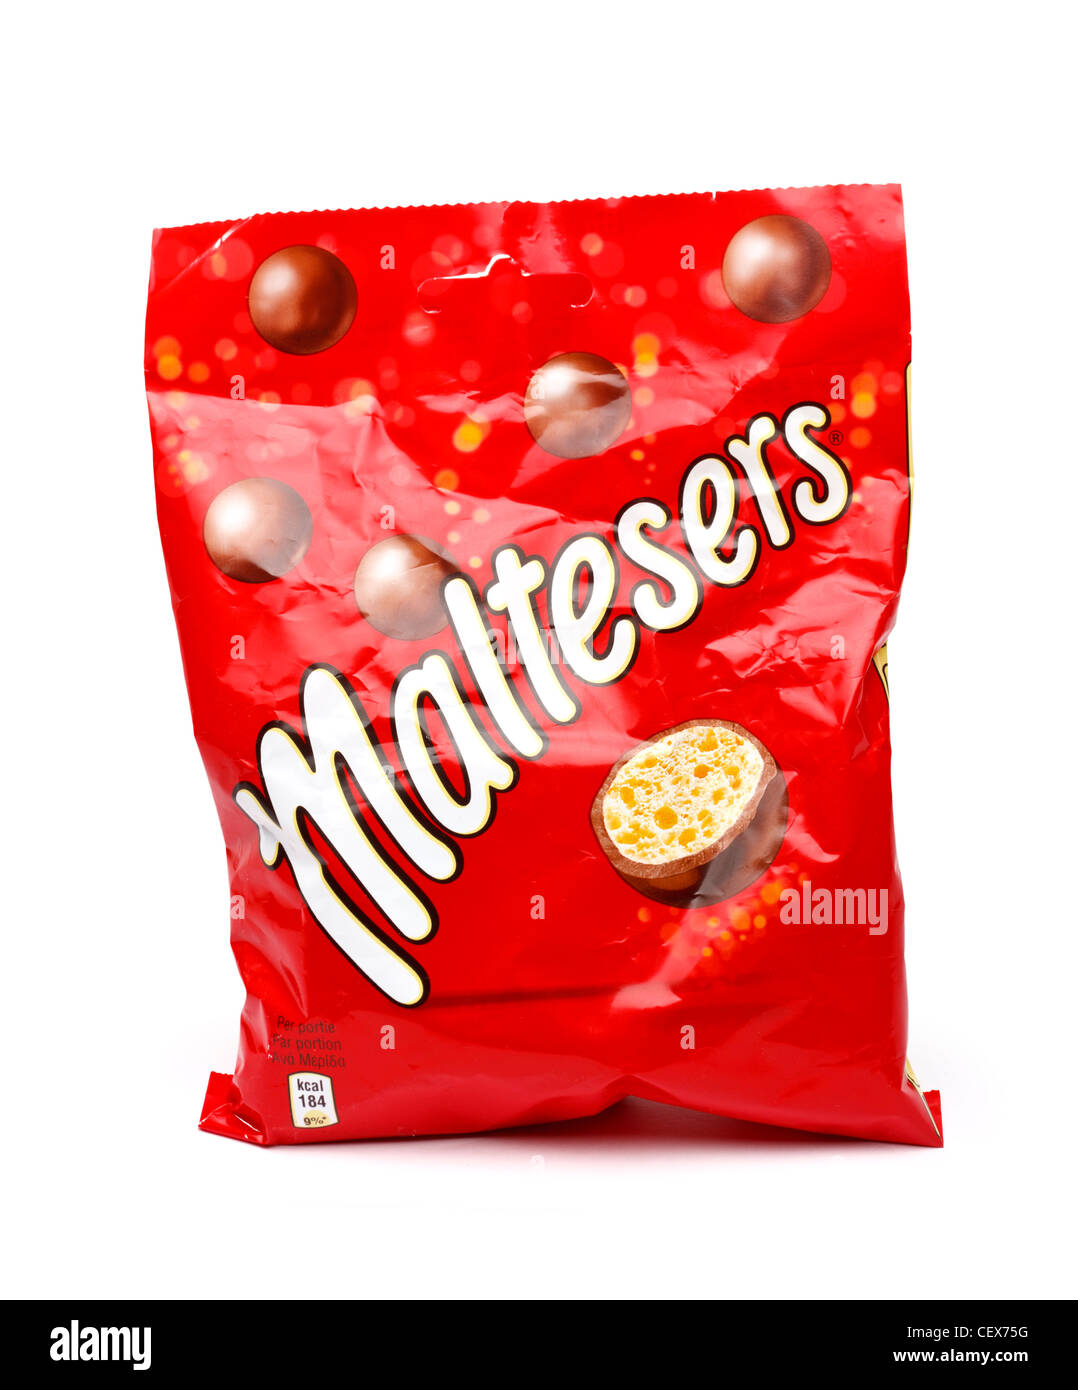 Maltesers Packet